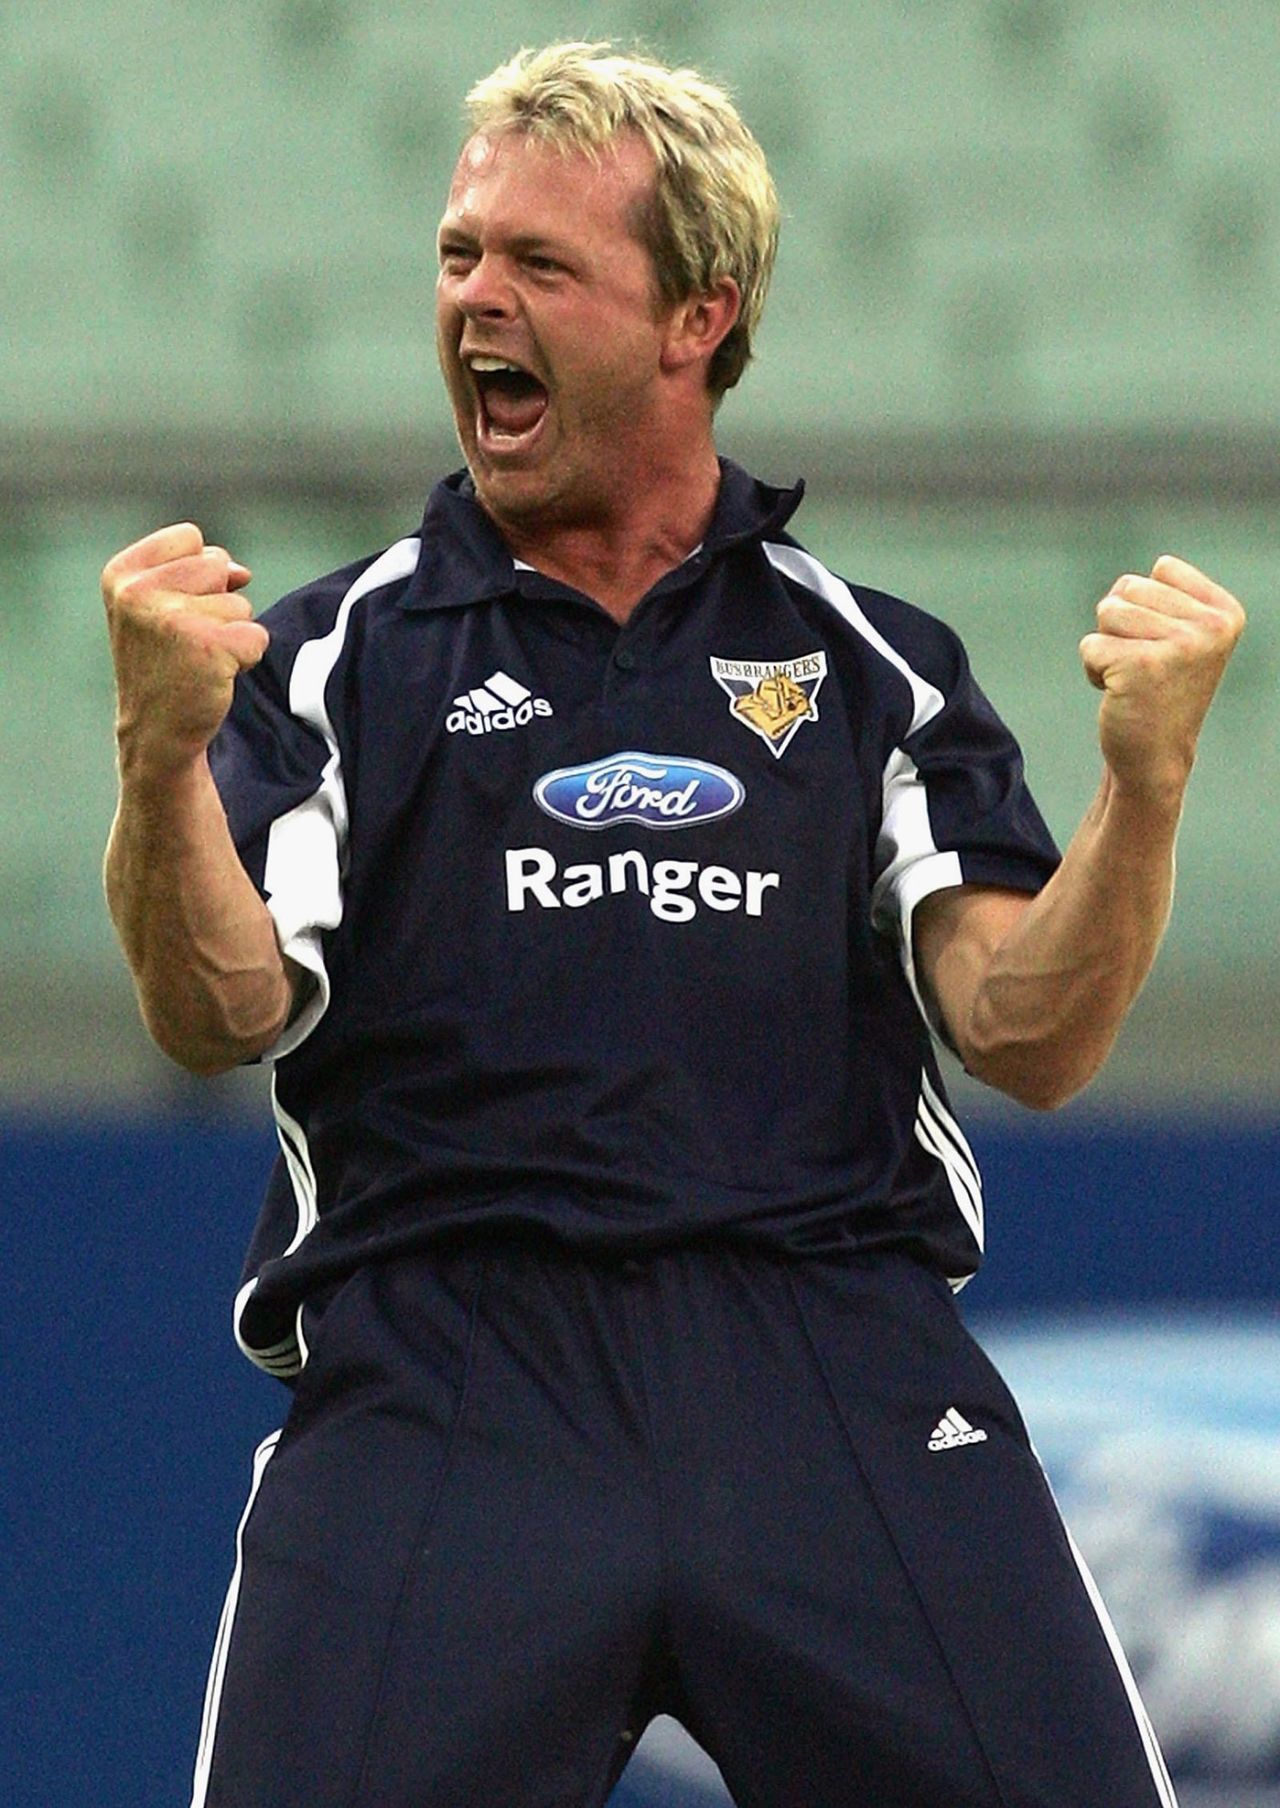 Mick Lewis celebrates a wicket, Victoria v Tasmania, Ford Ranger Cup, Melbourne, November 12, 2006